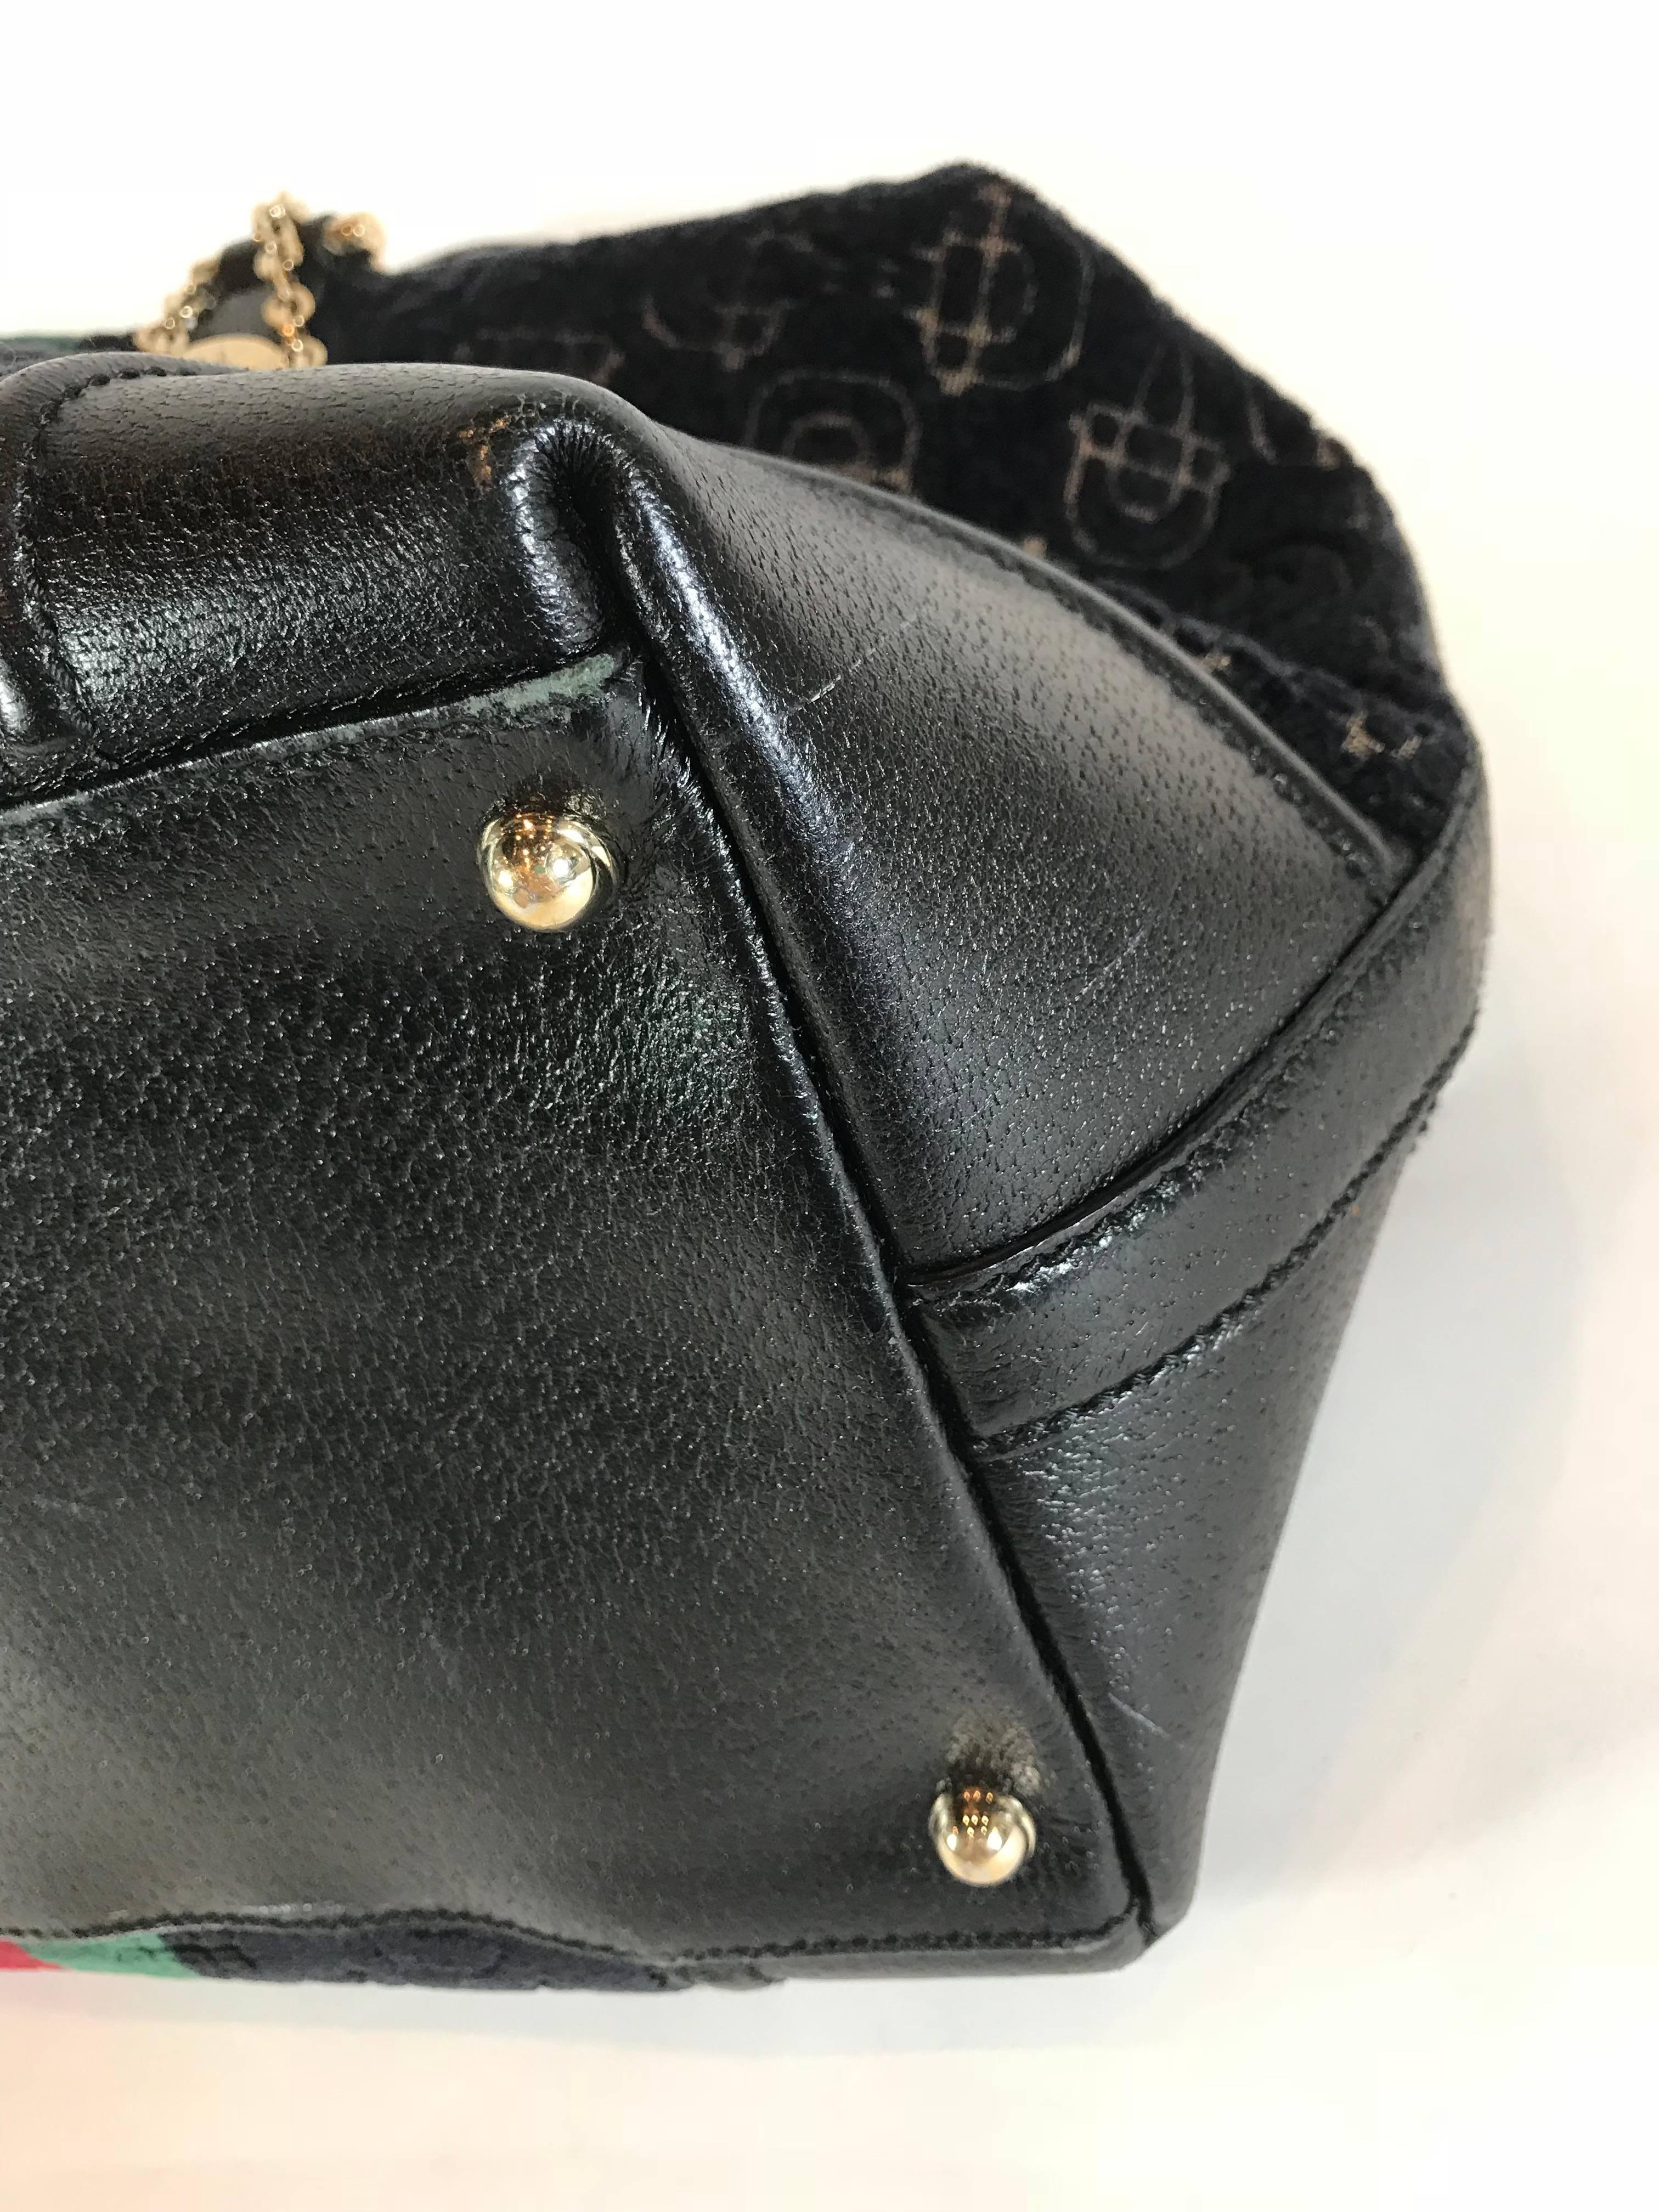 Gucci Black Velvet Treasure Boston Bag For Sale 4